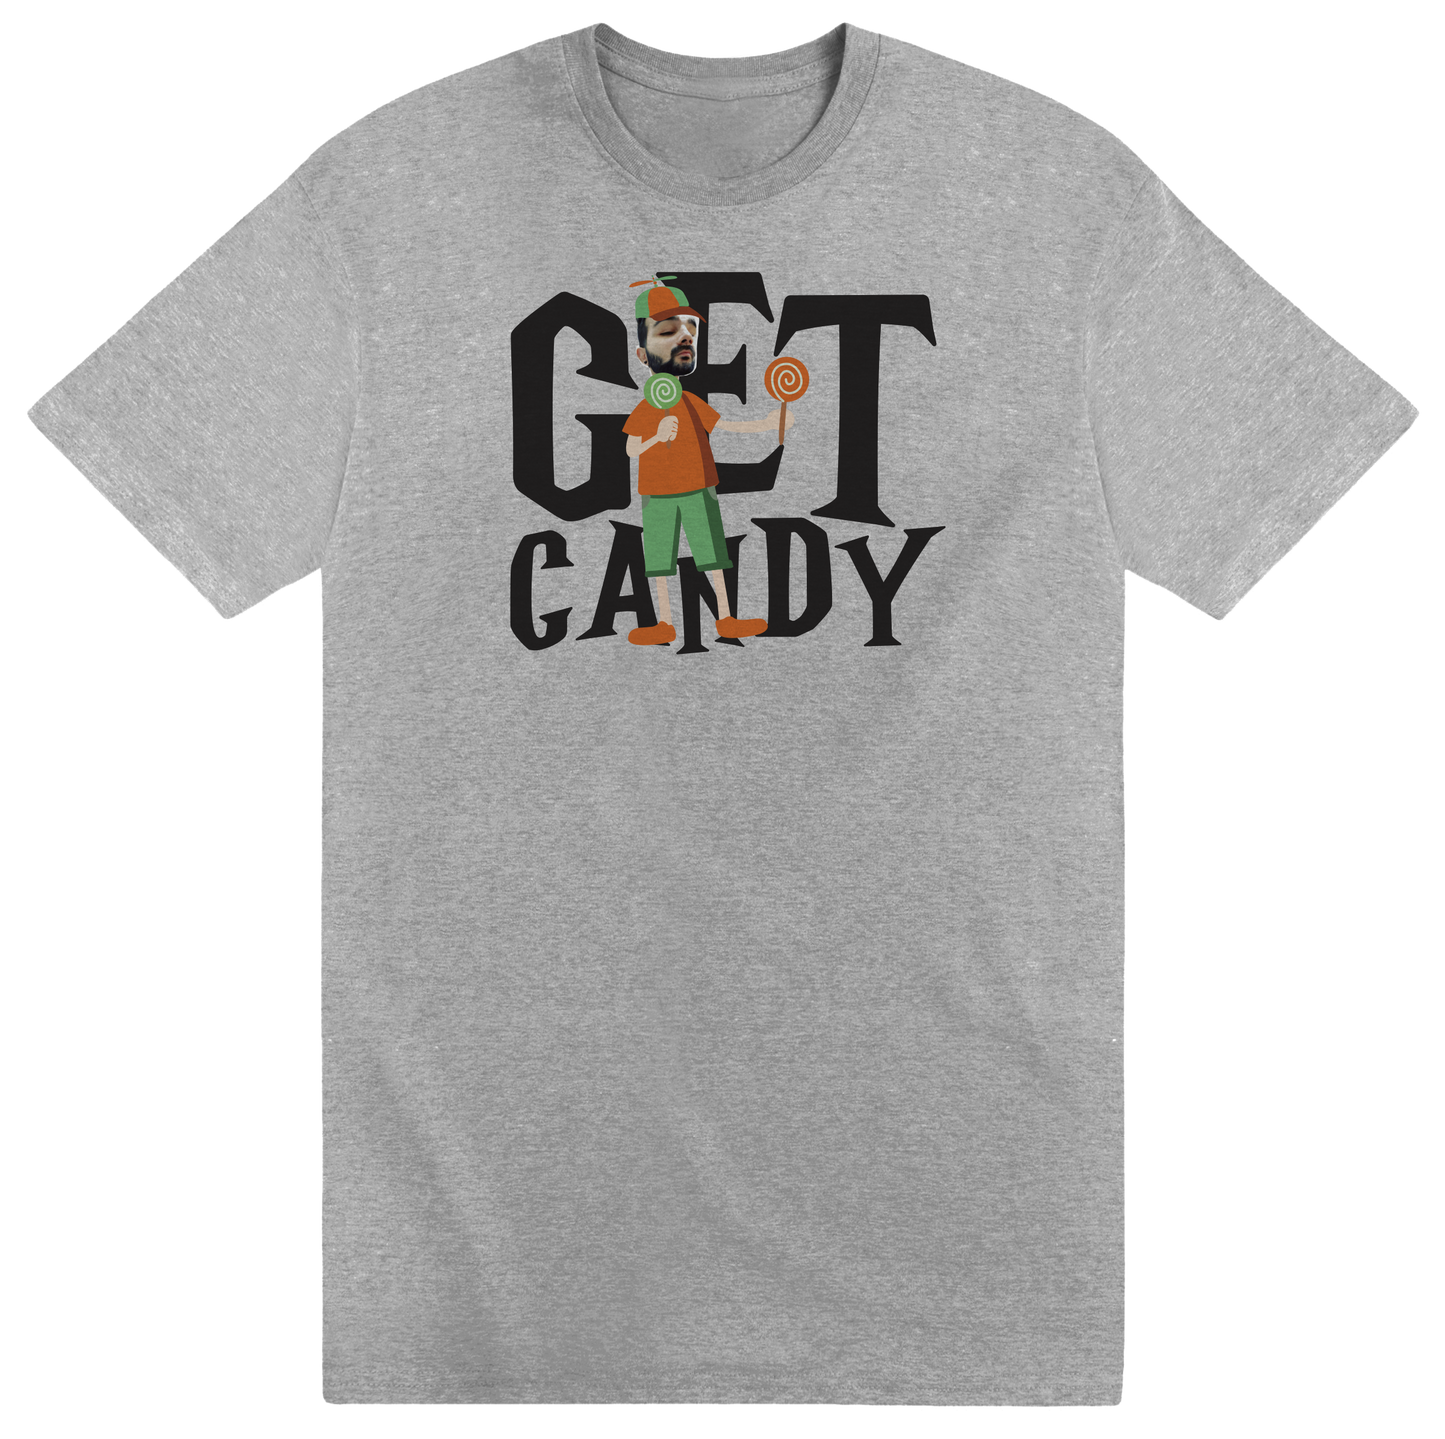 Get Candy Tarz - Gray